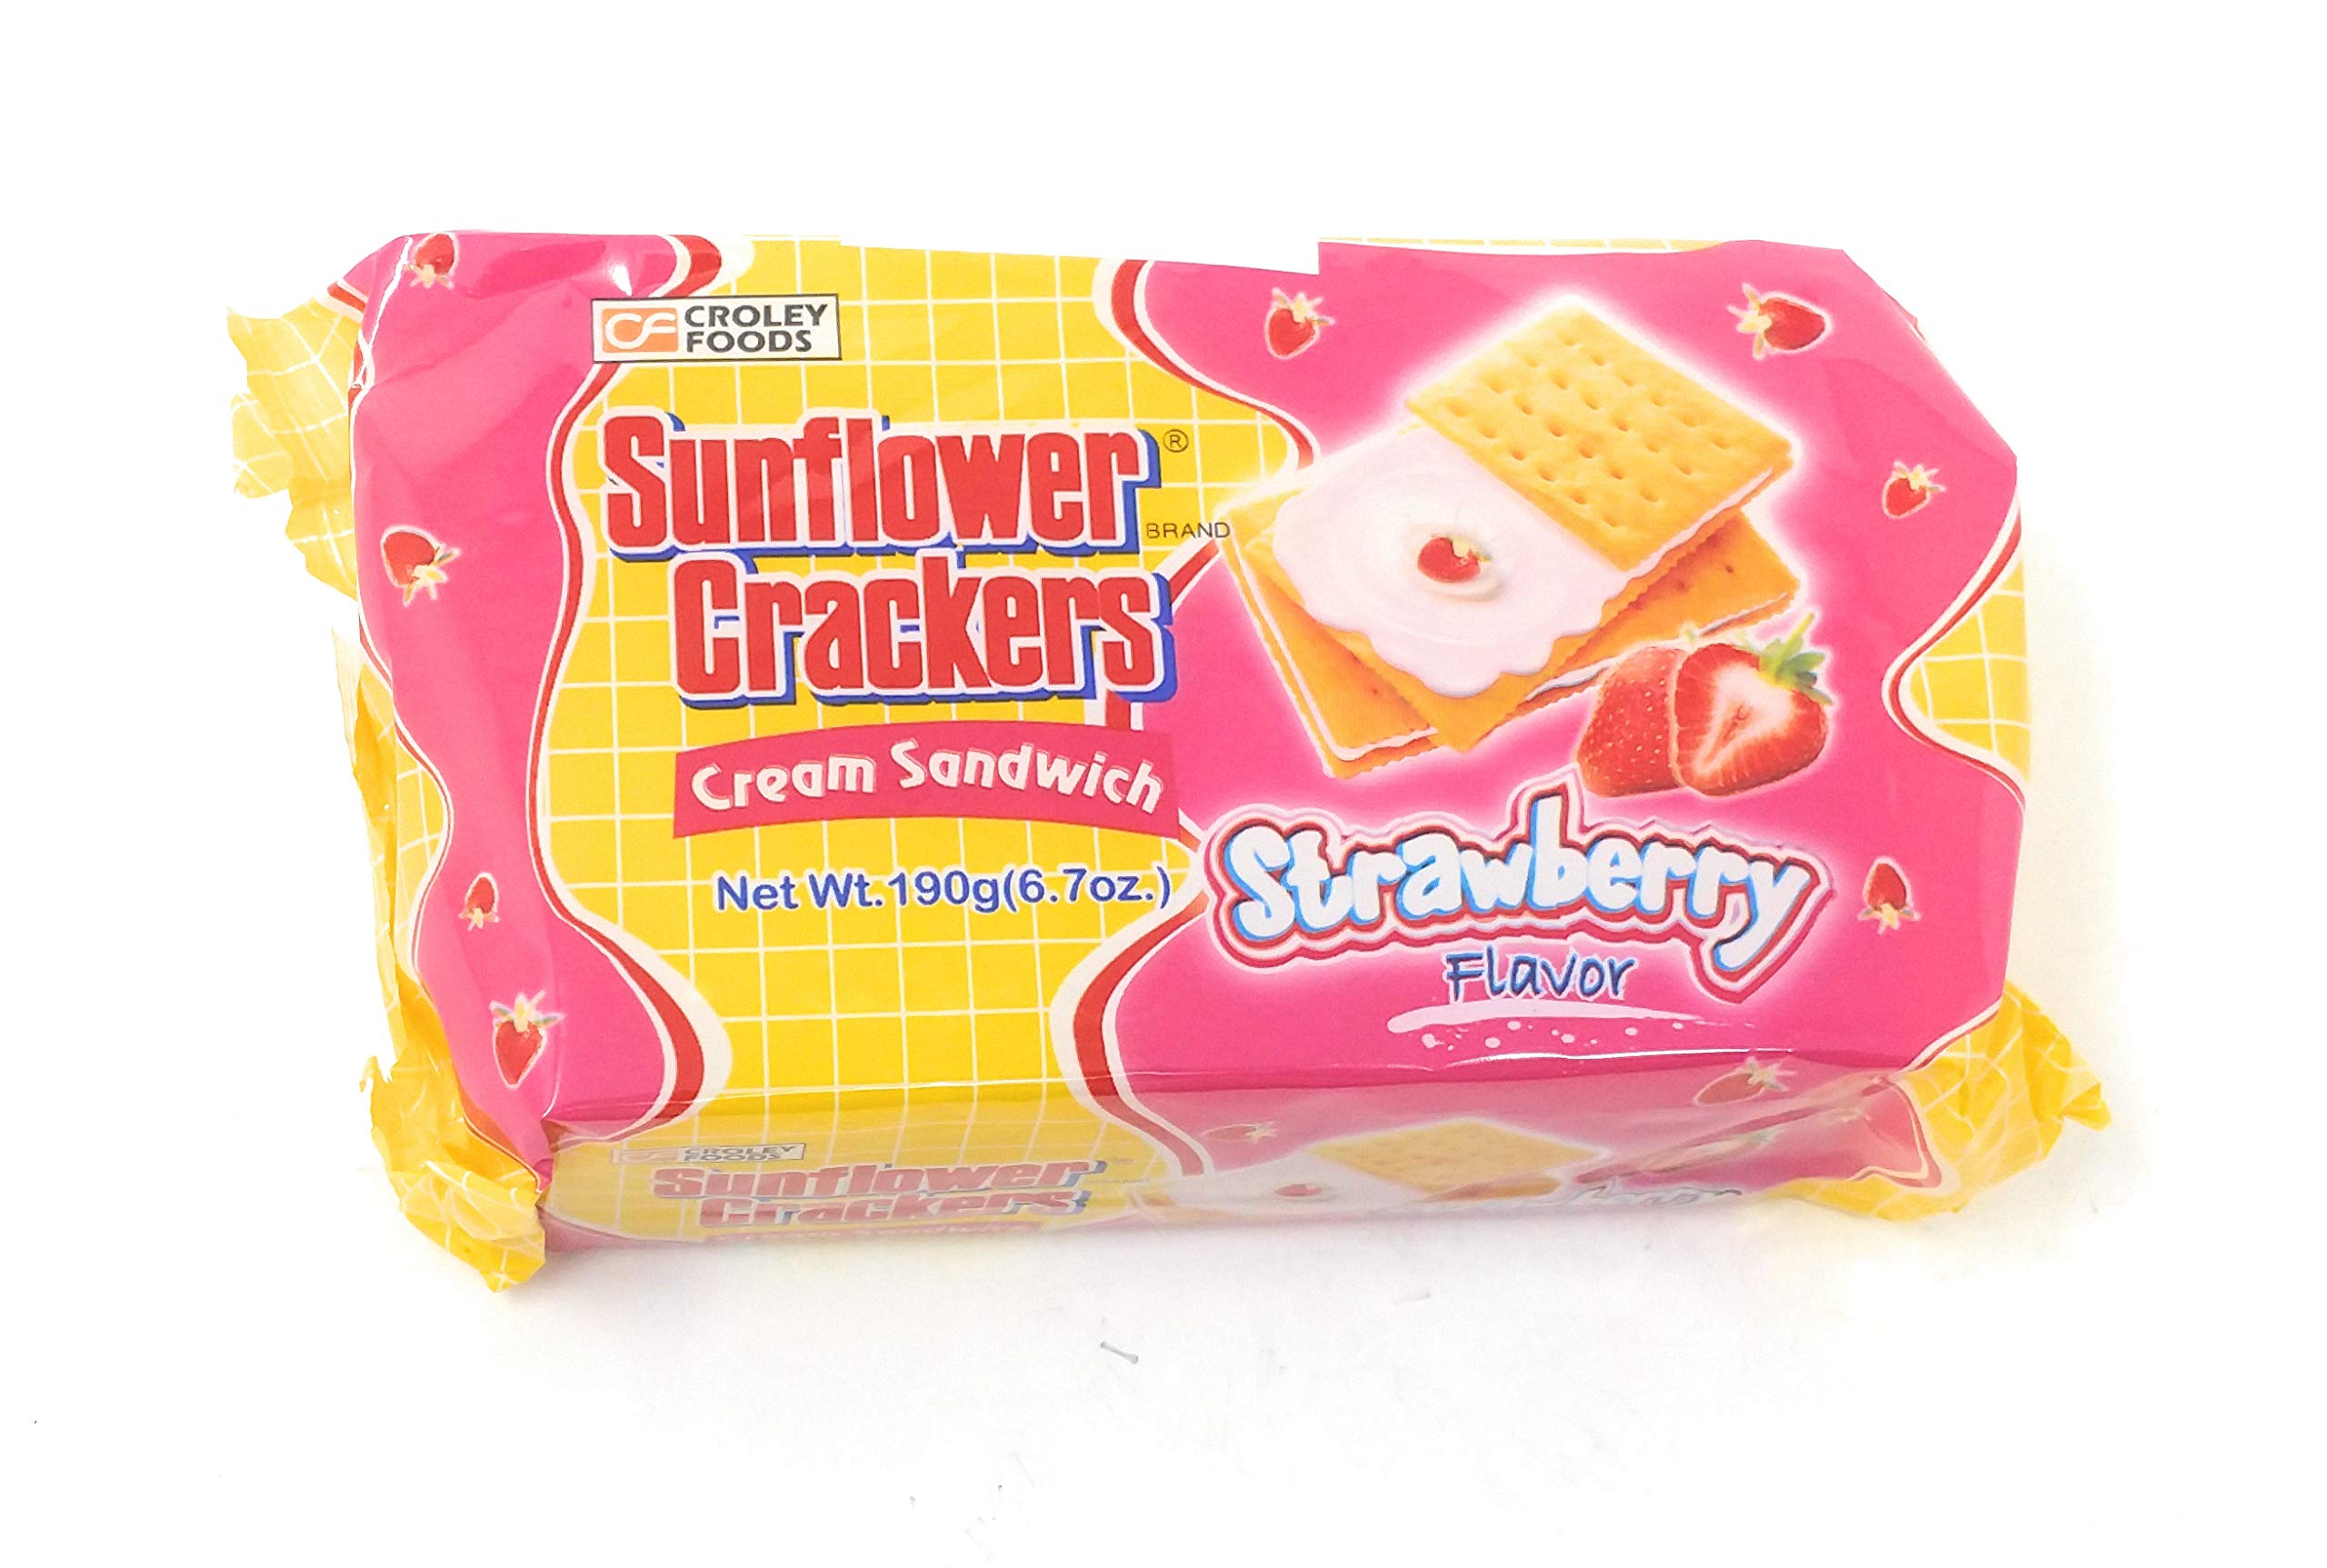 Croley Foods Sunflower Crackers, Cream Sandwich, 6.7 oz (190g), 7 Pack